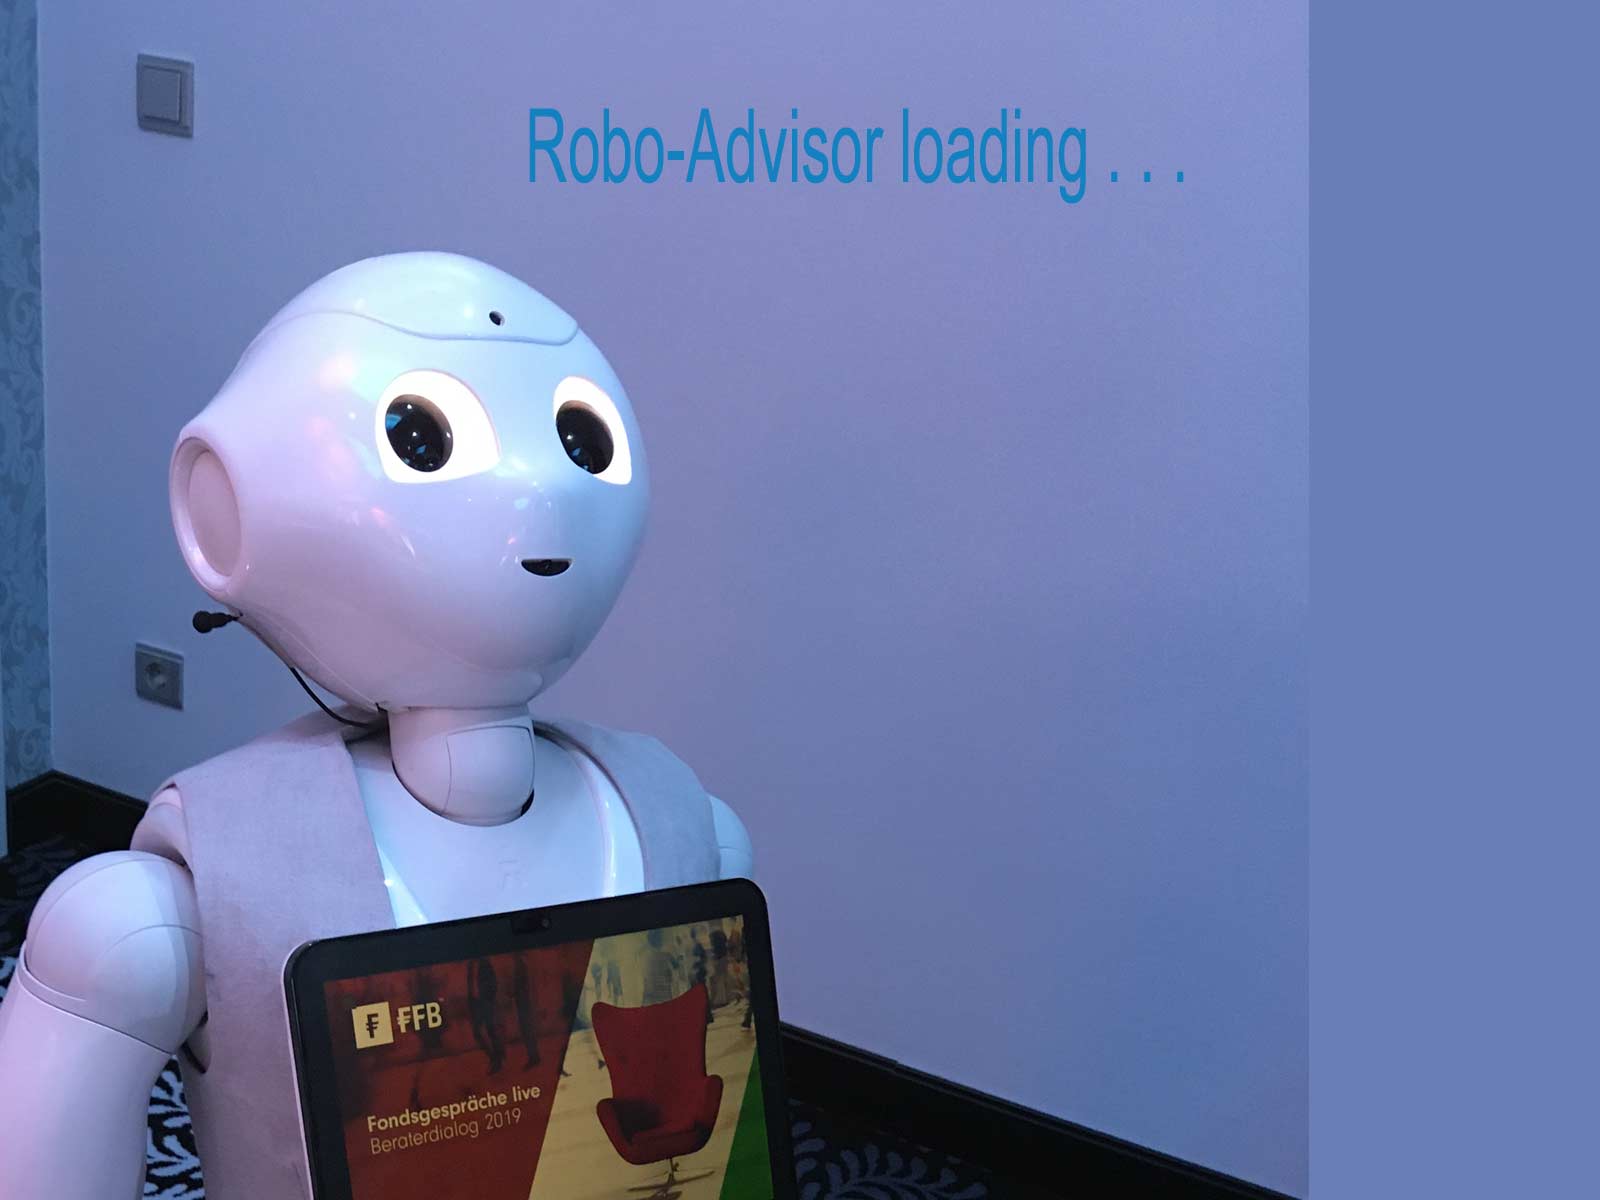 Robo Advisor